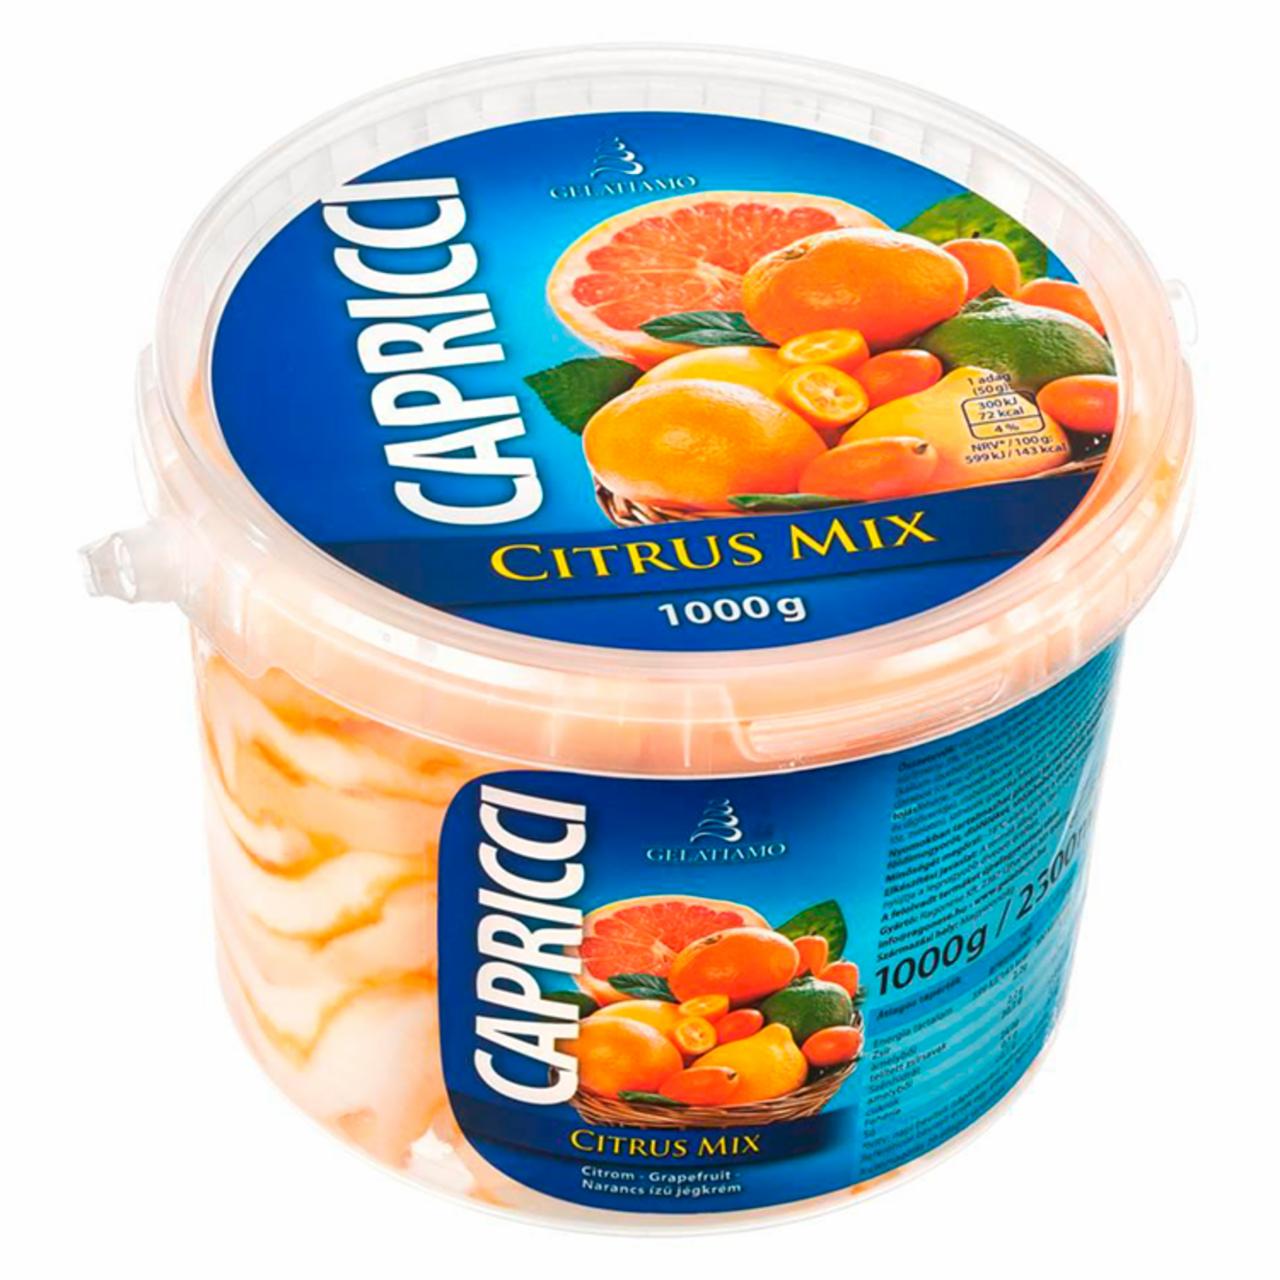 Képek - Gelatiamo Capricci Citrus Mix citrom-grapefruit-narancs ízű jégkrém 1000 g